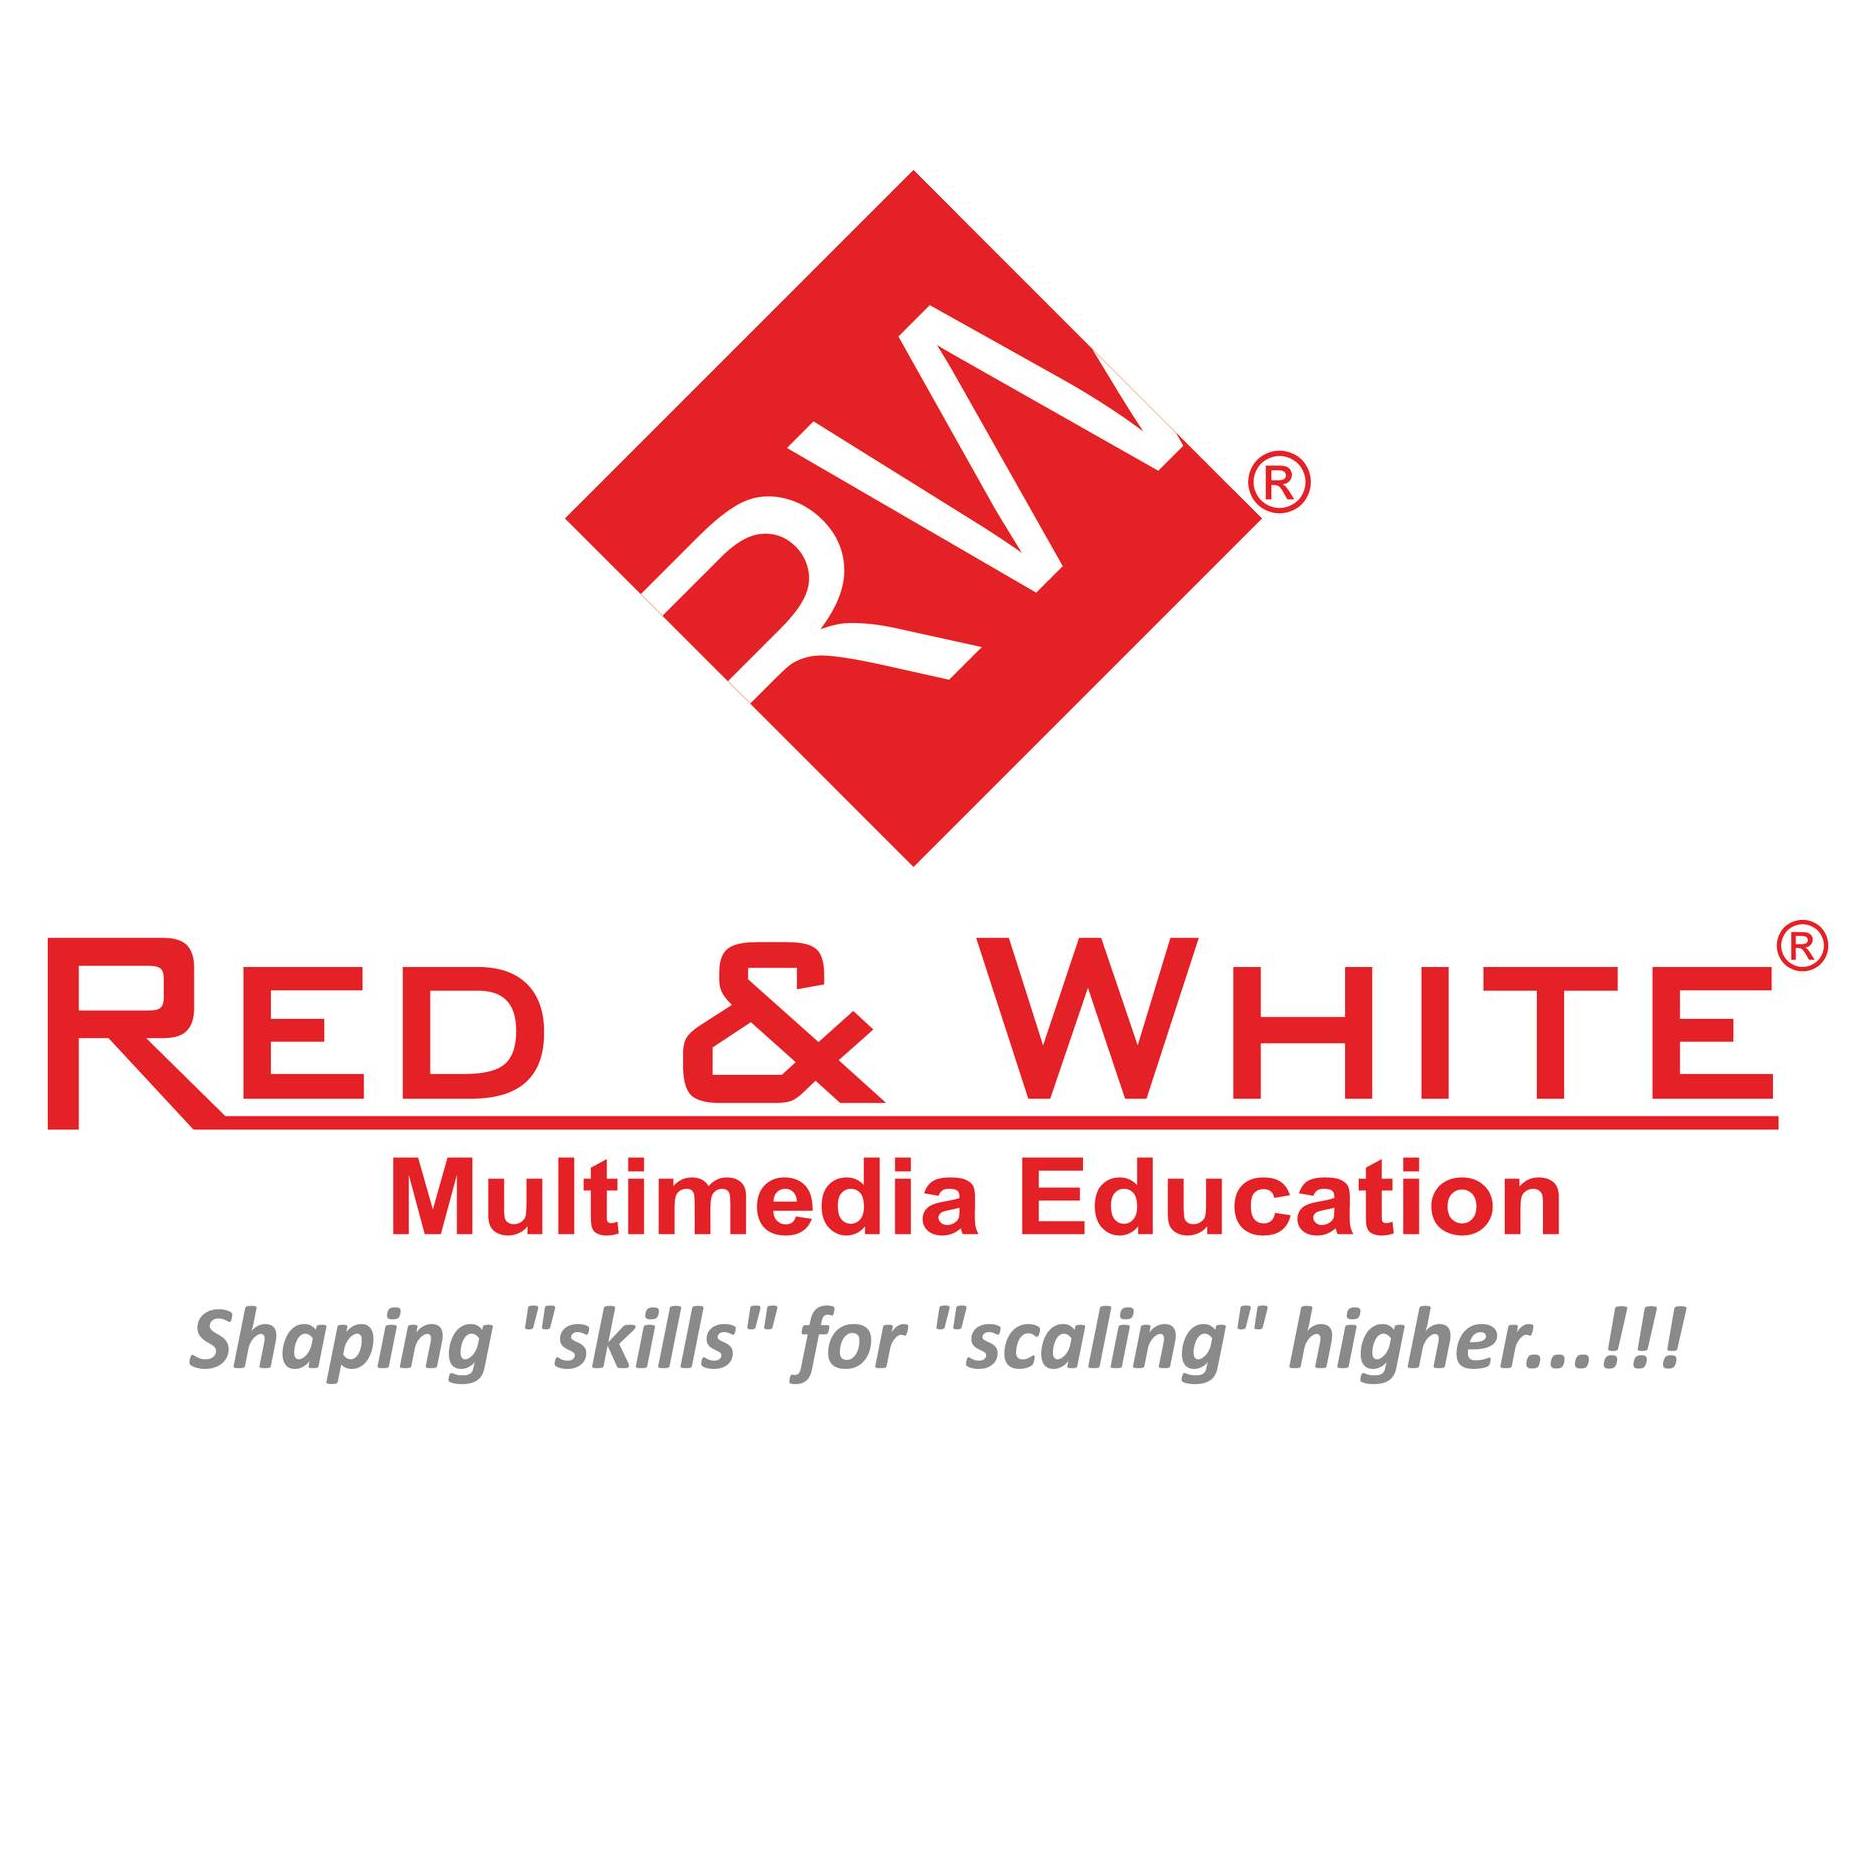 Red & White Multimedia Education Logo